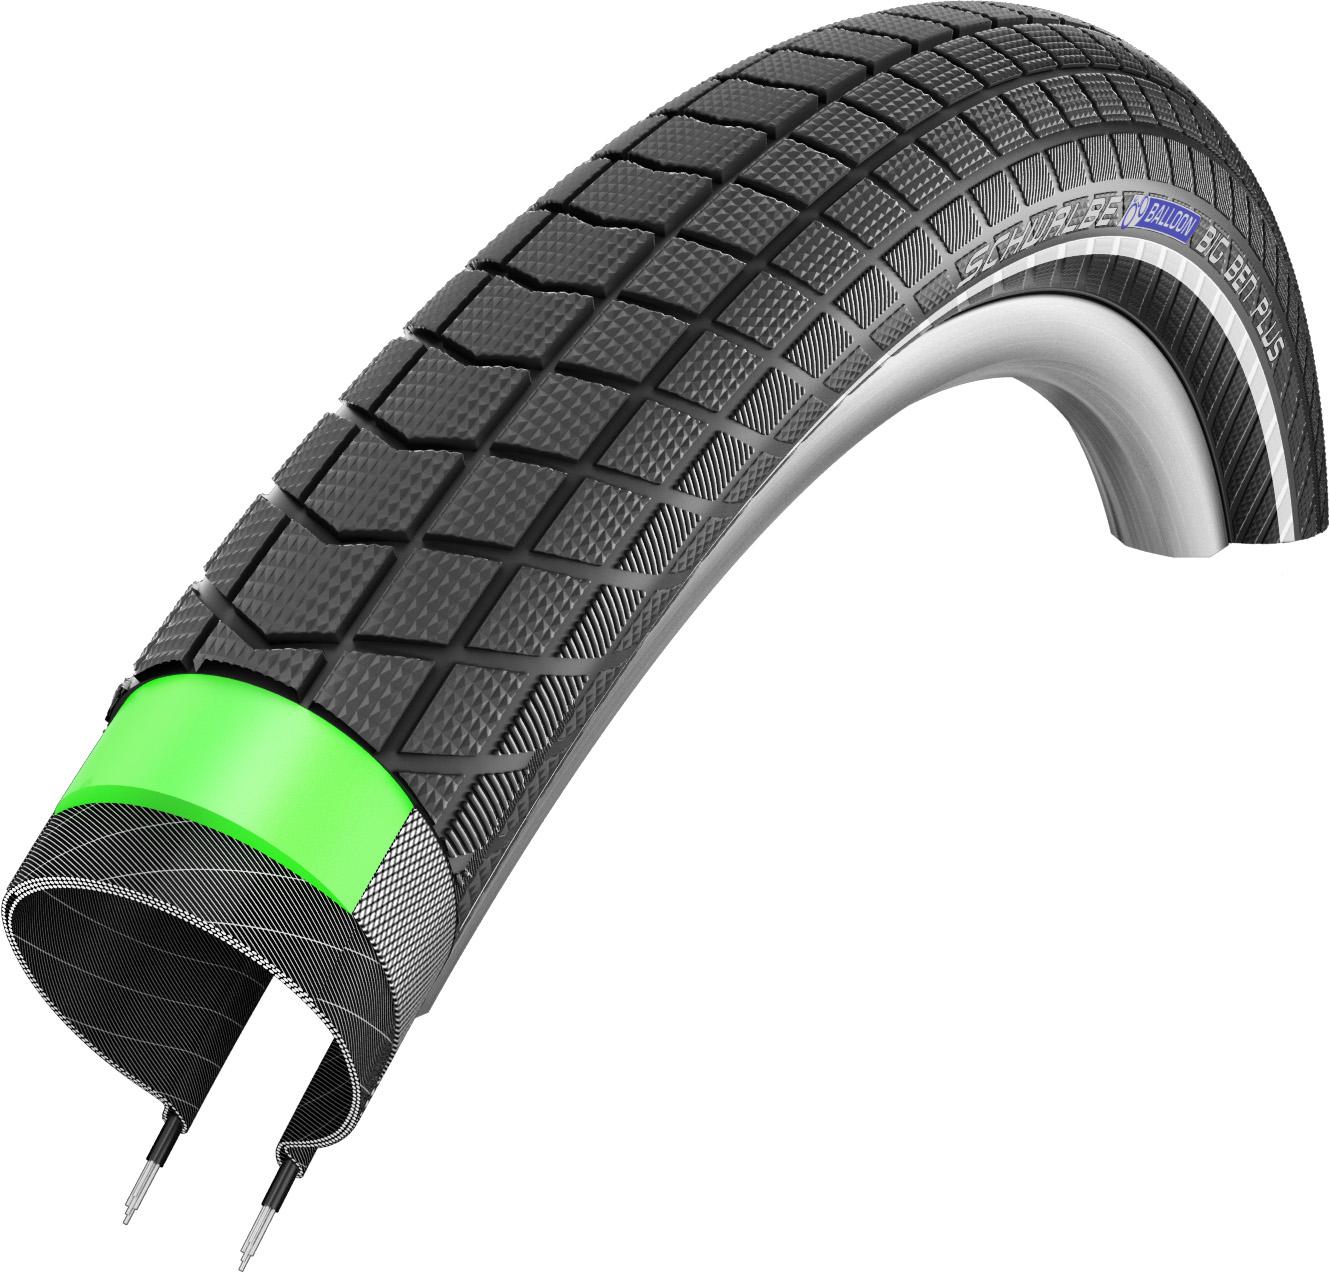 Schwalbe Big Ben Plus Greenguard Mtb Tyre  Black/reflex